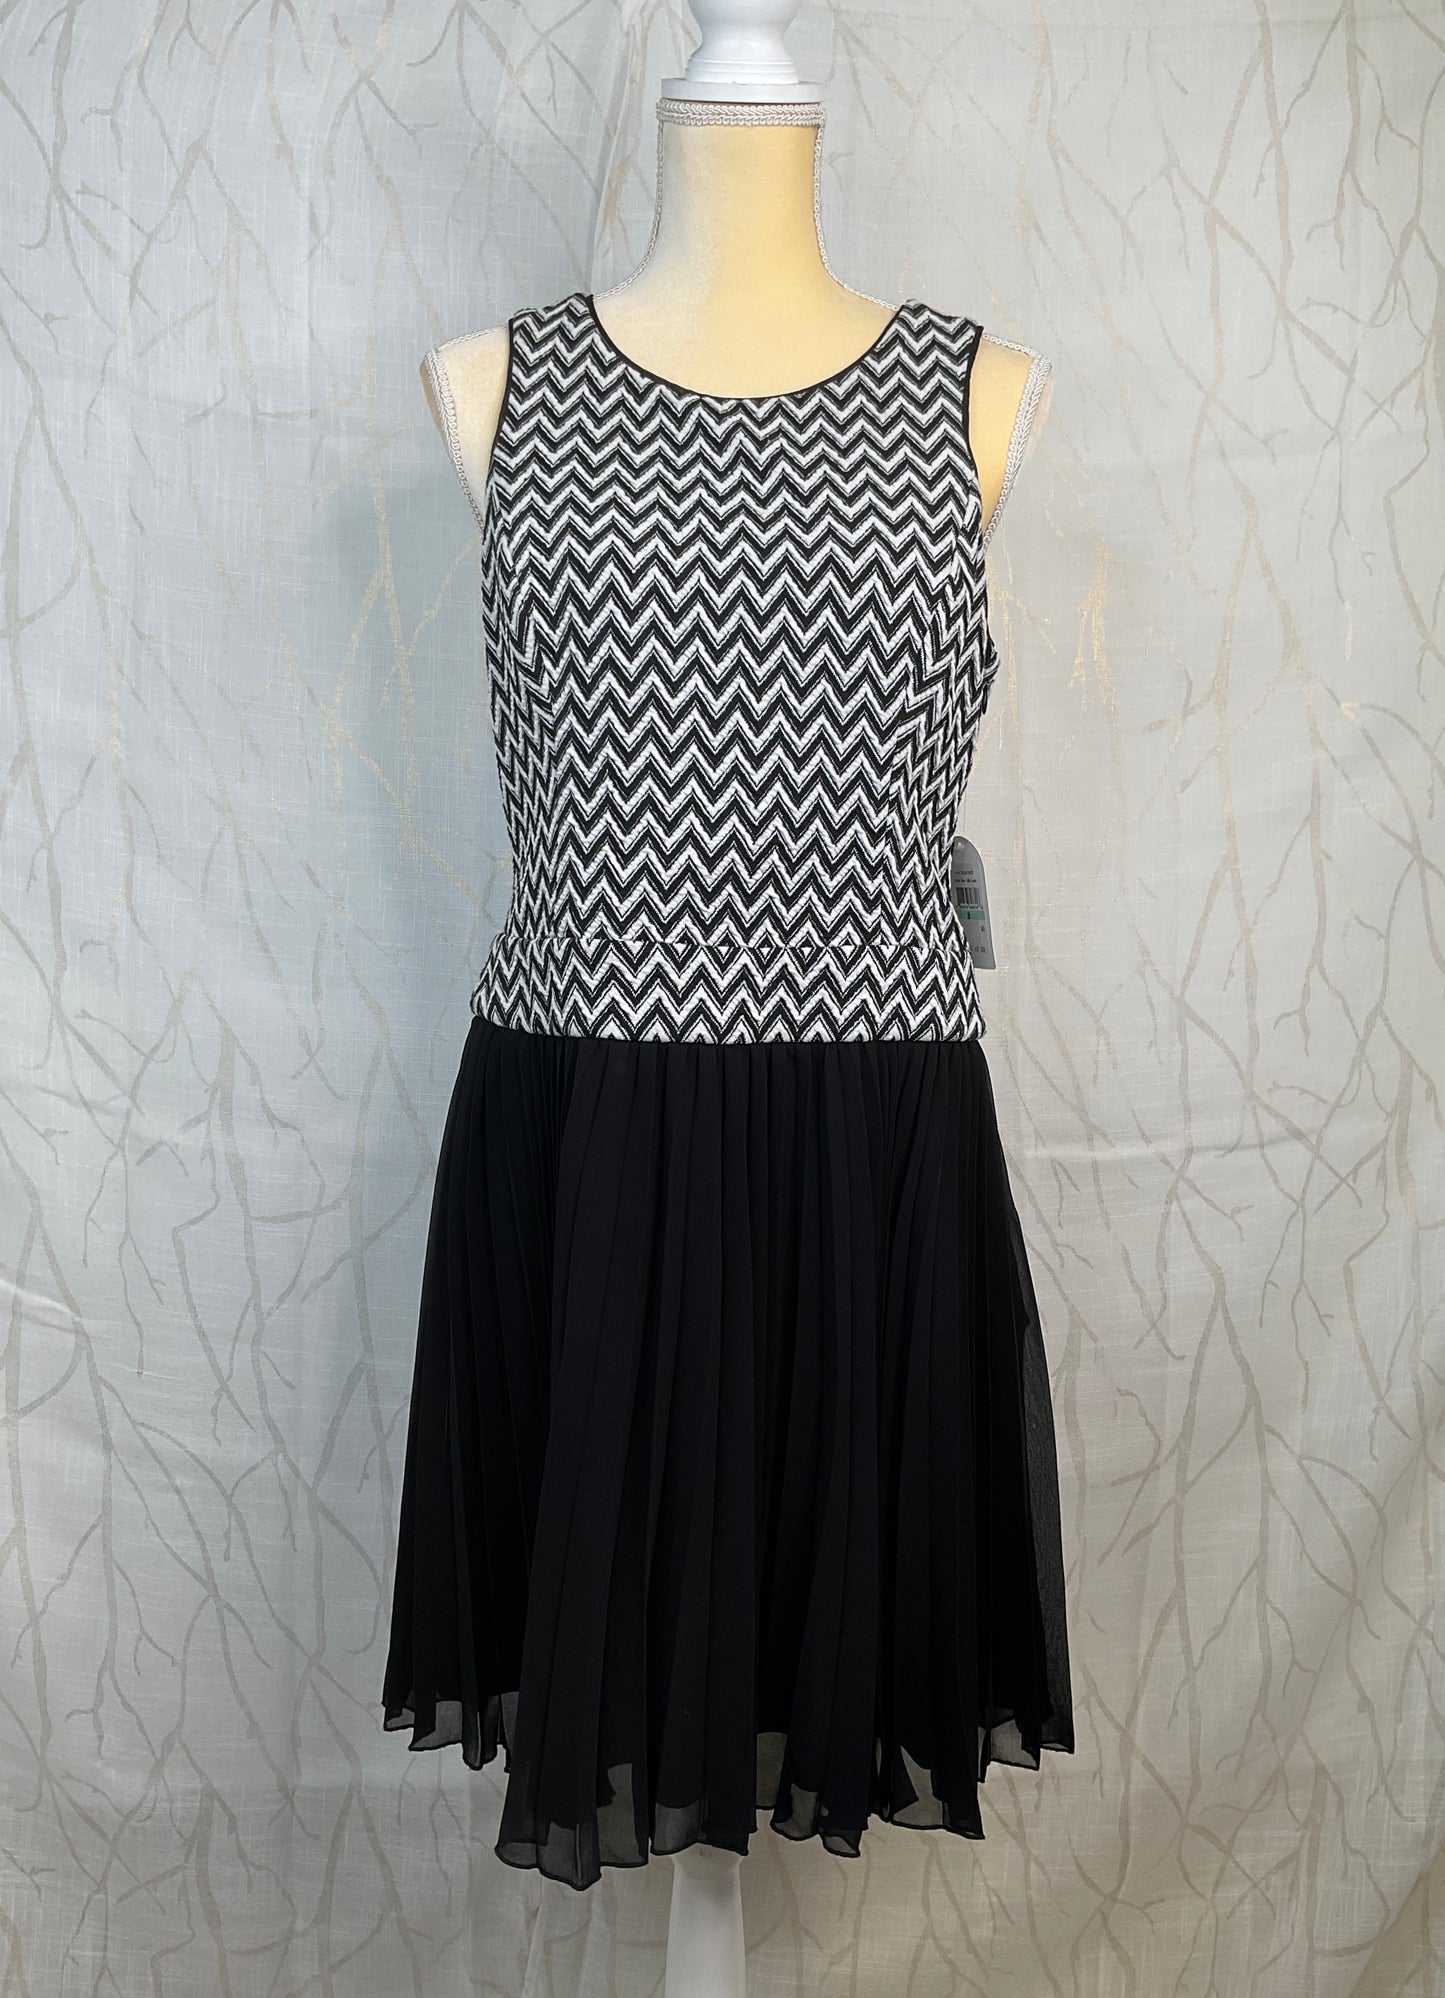 Jessica Simpson Black & White Dress, NWT, Size 8